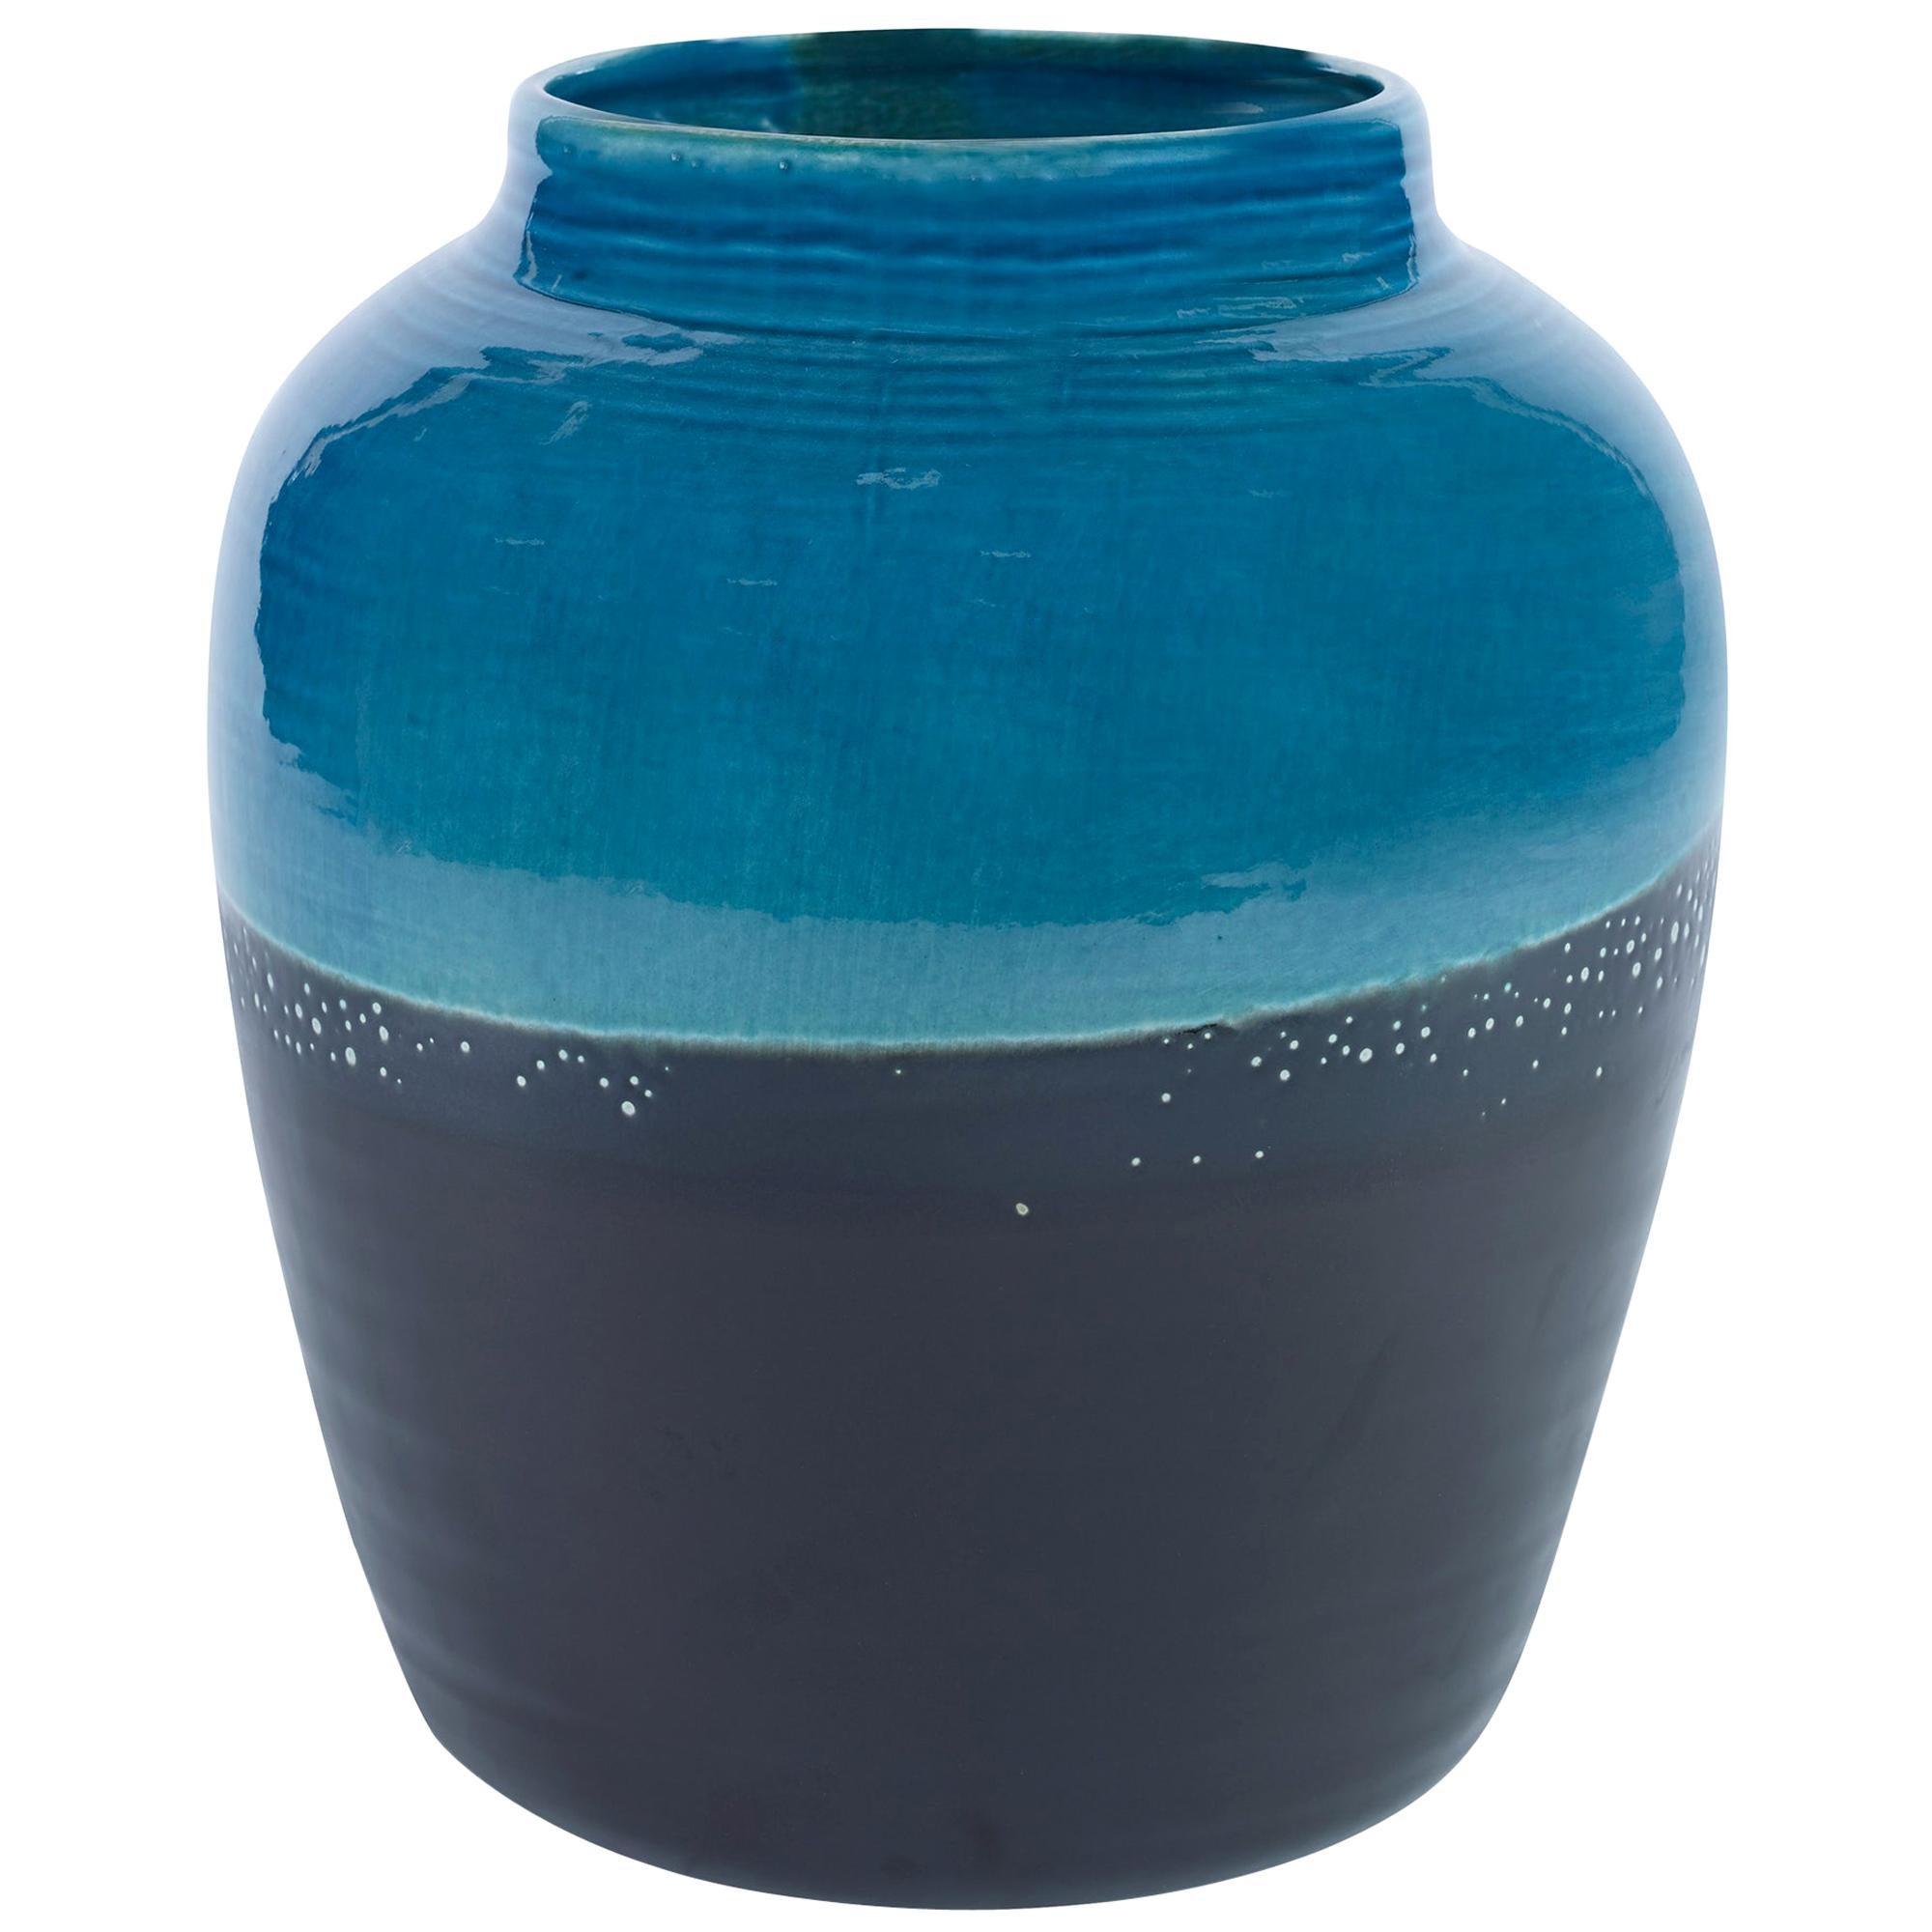 Aries Medium Vase in Black and Blue Ceramic by CuratedKravet